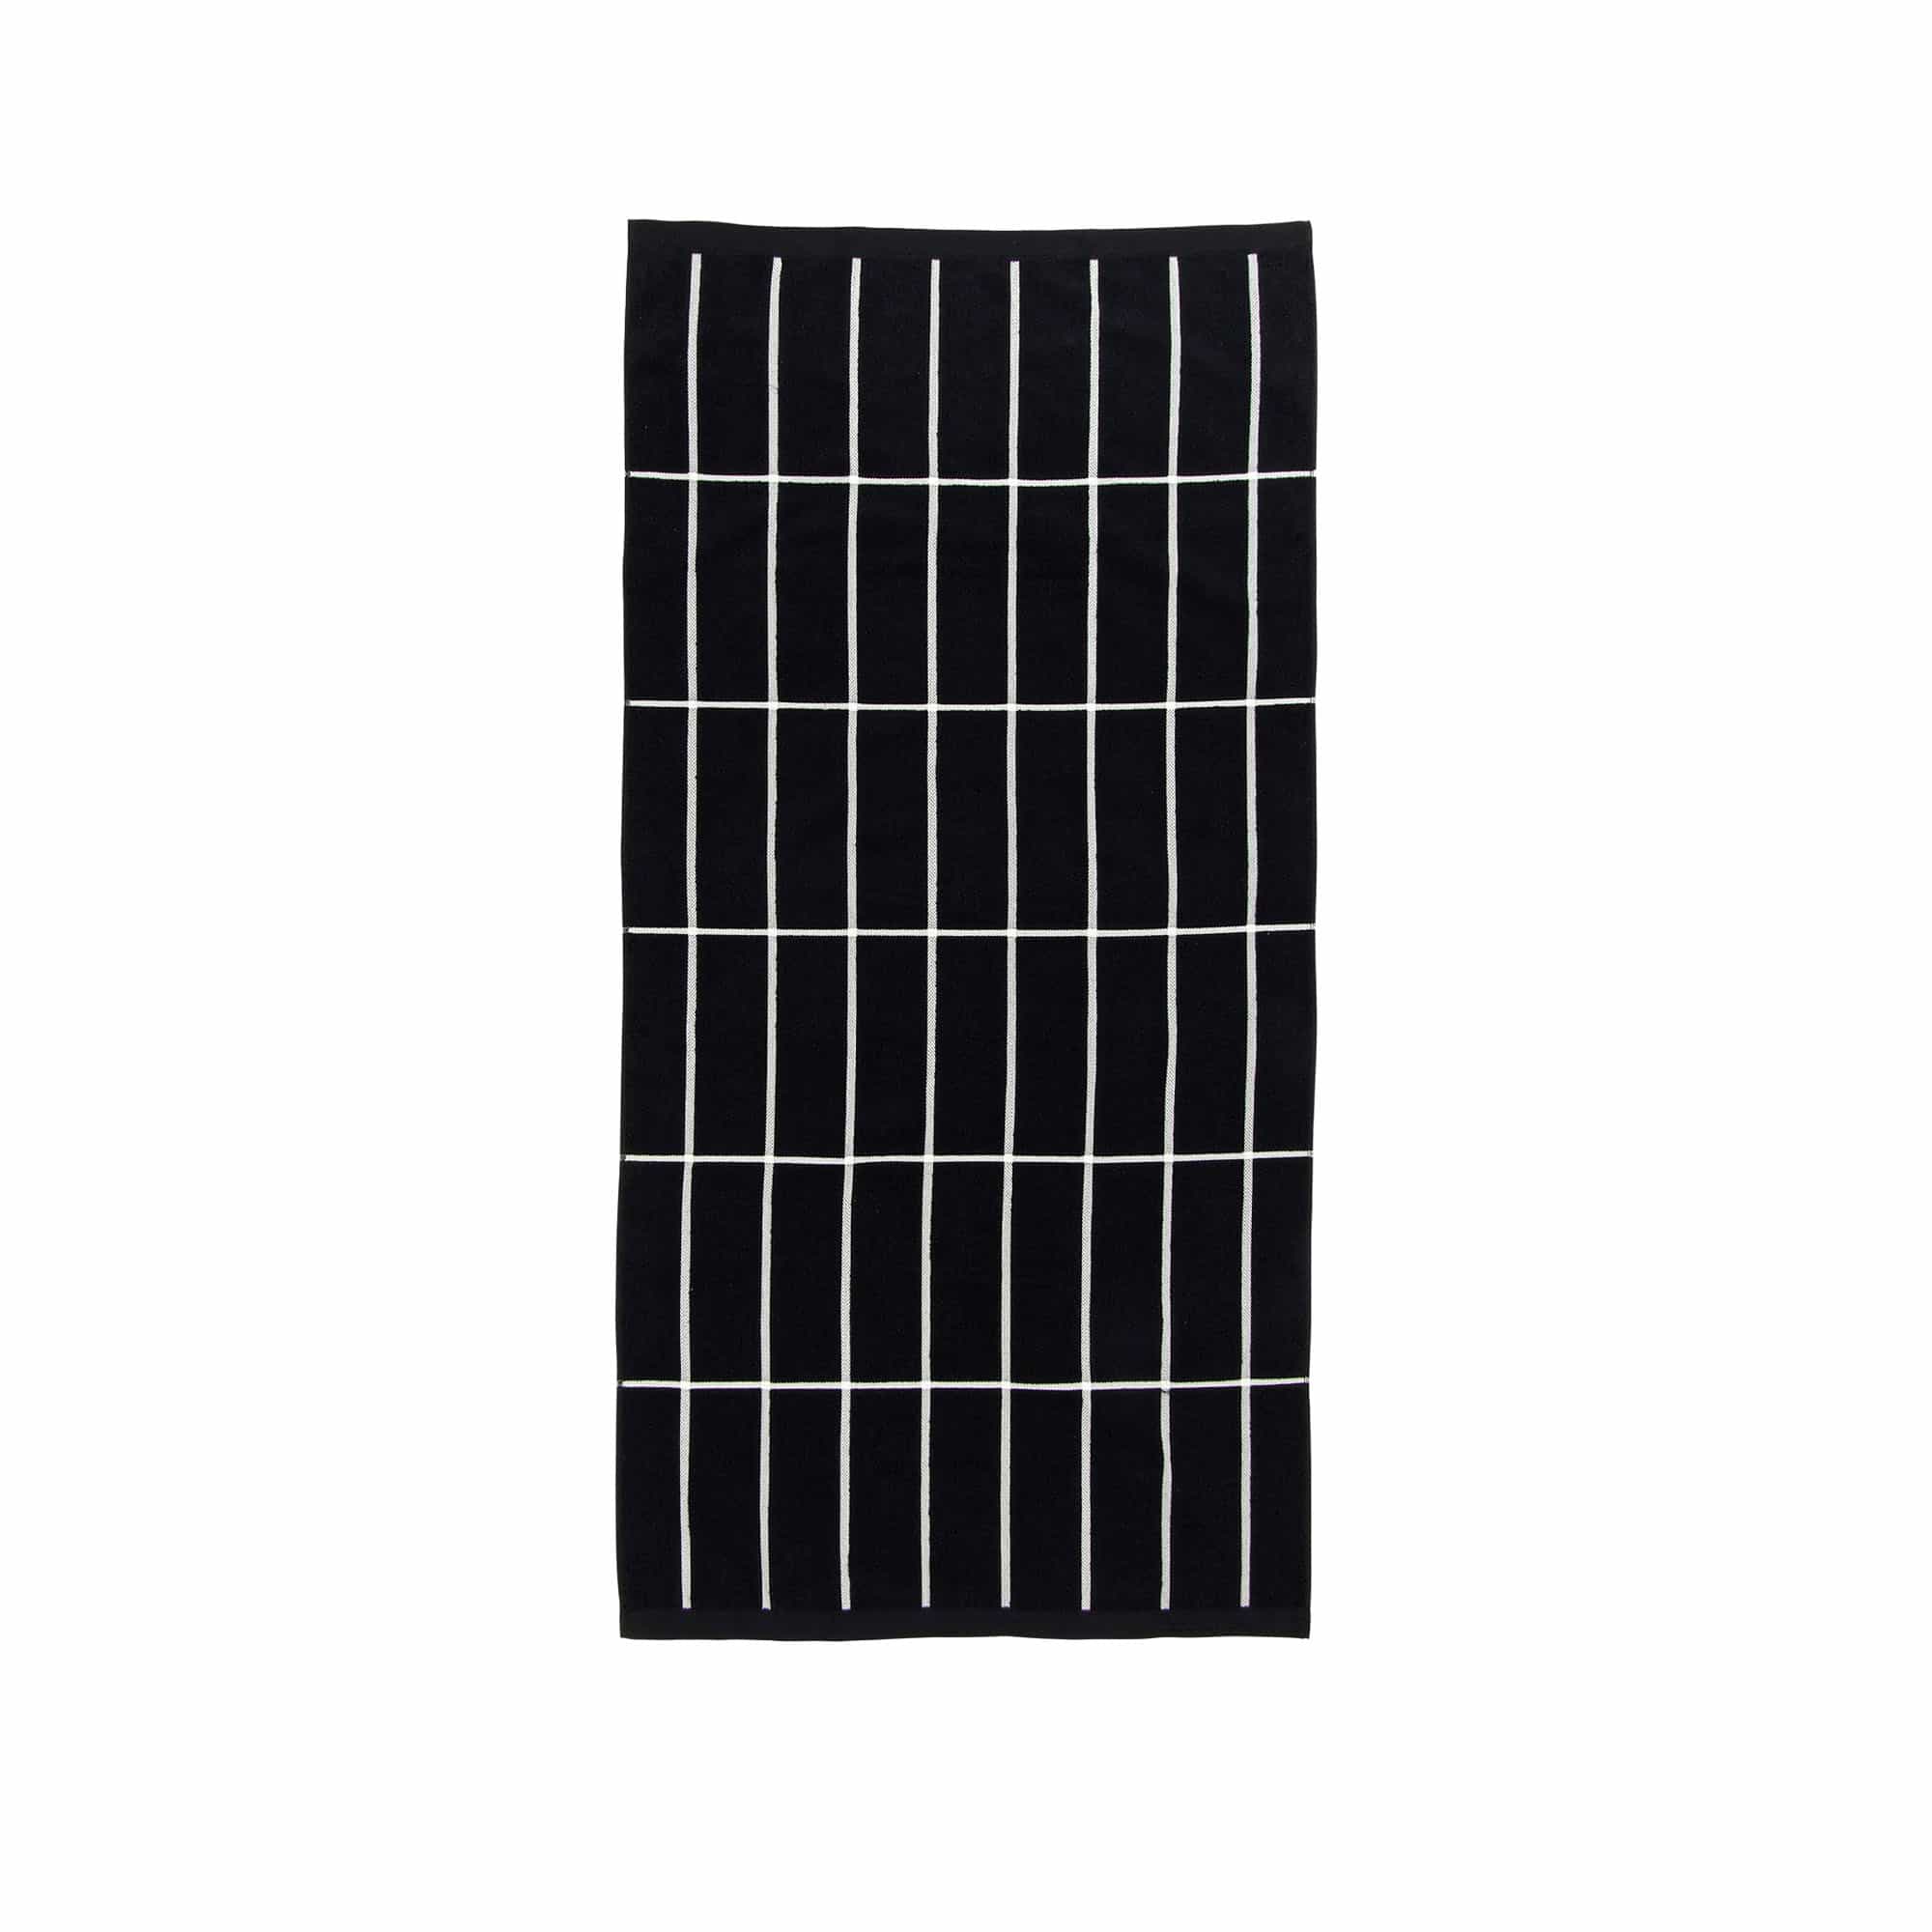 Tiiliskivi Hand Towel 50X70 cm Black, White